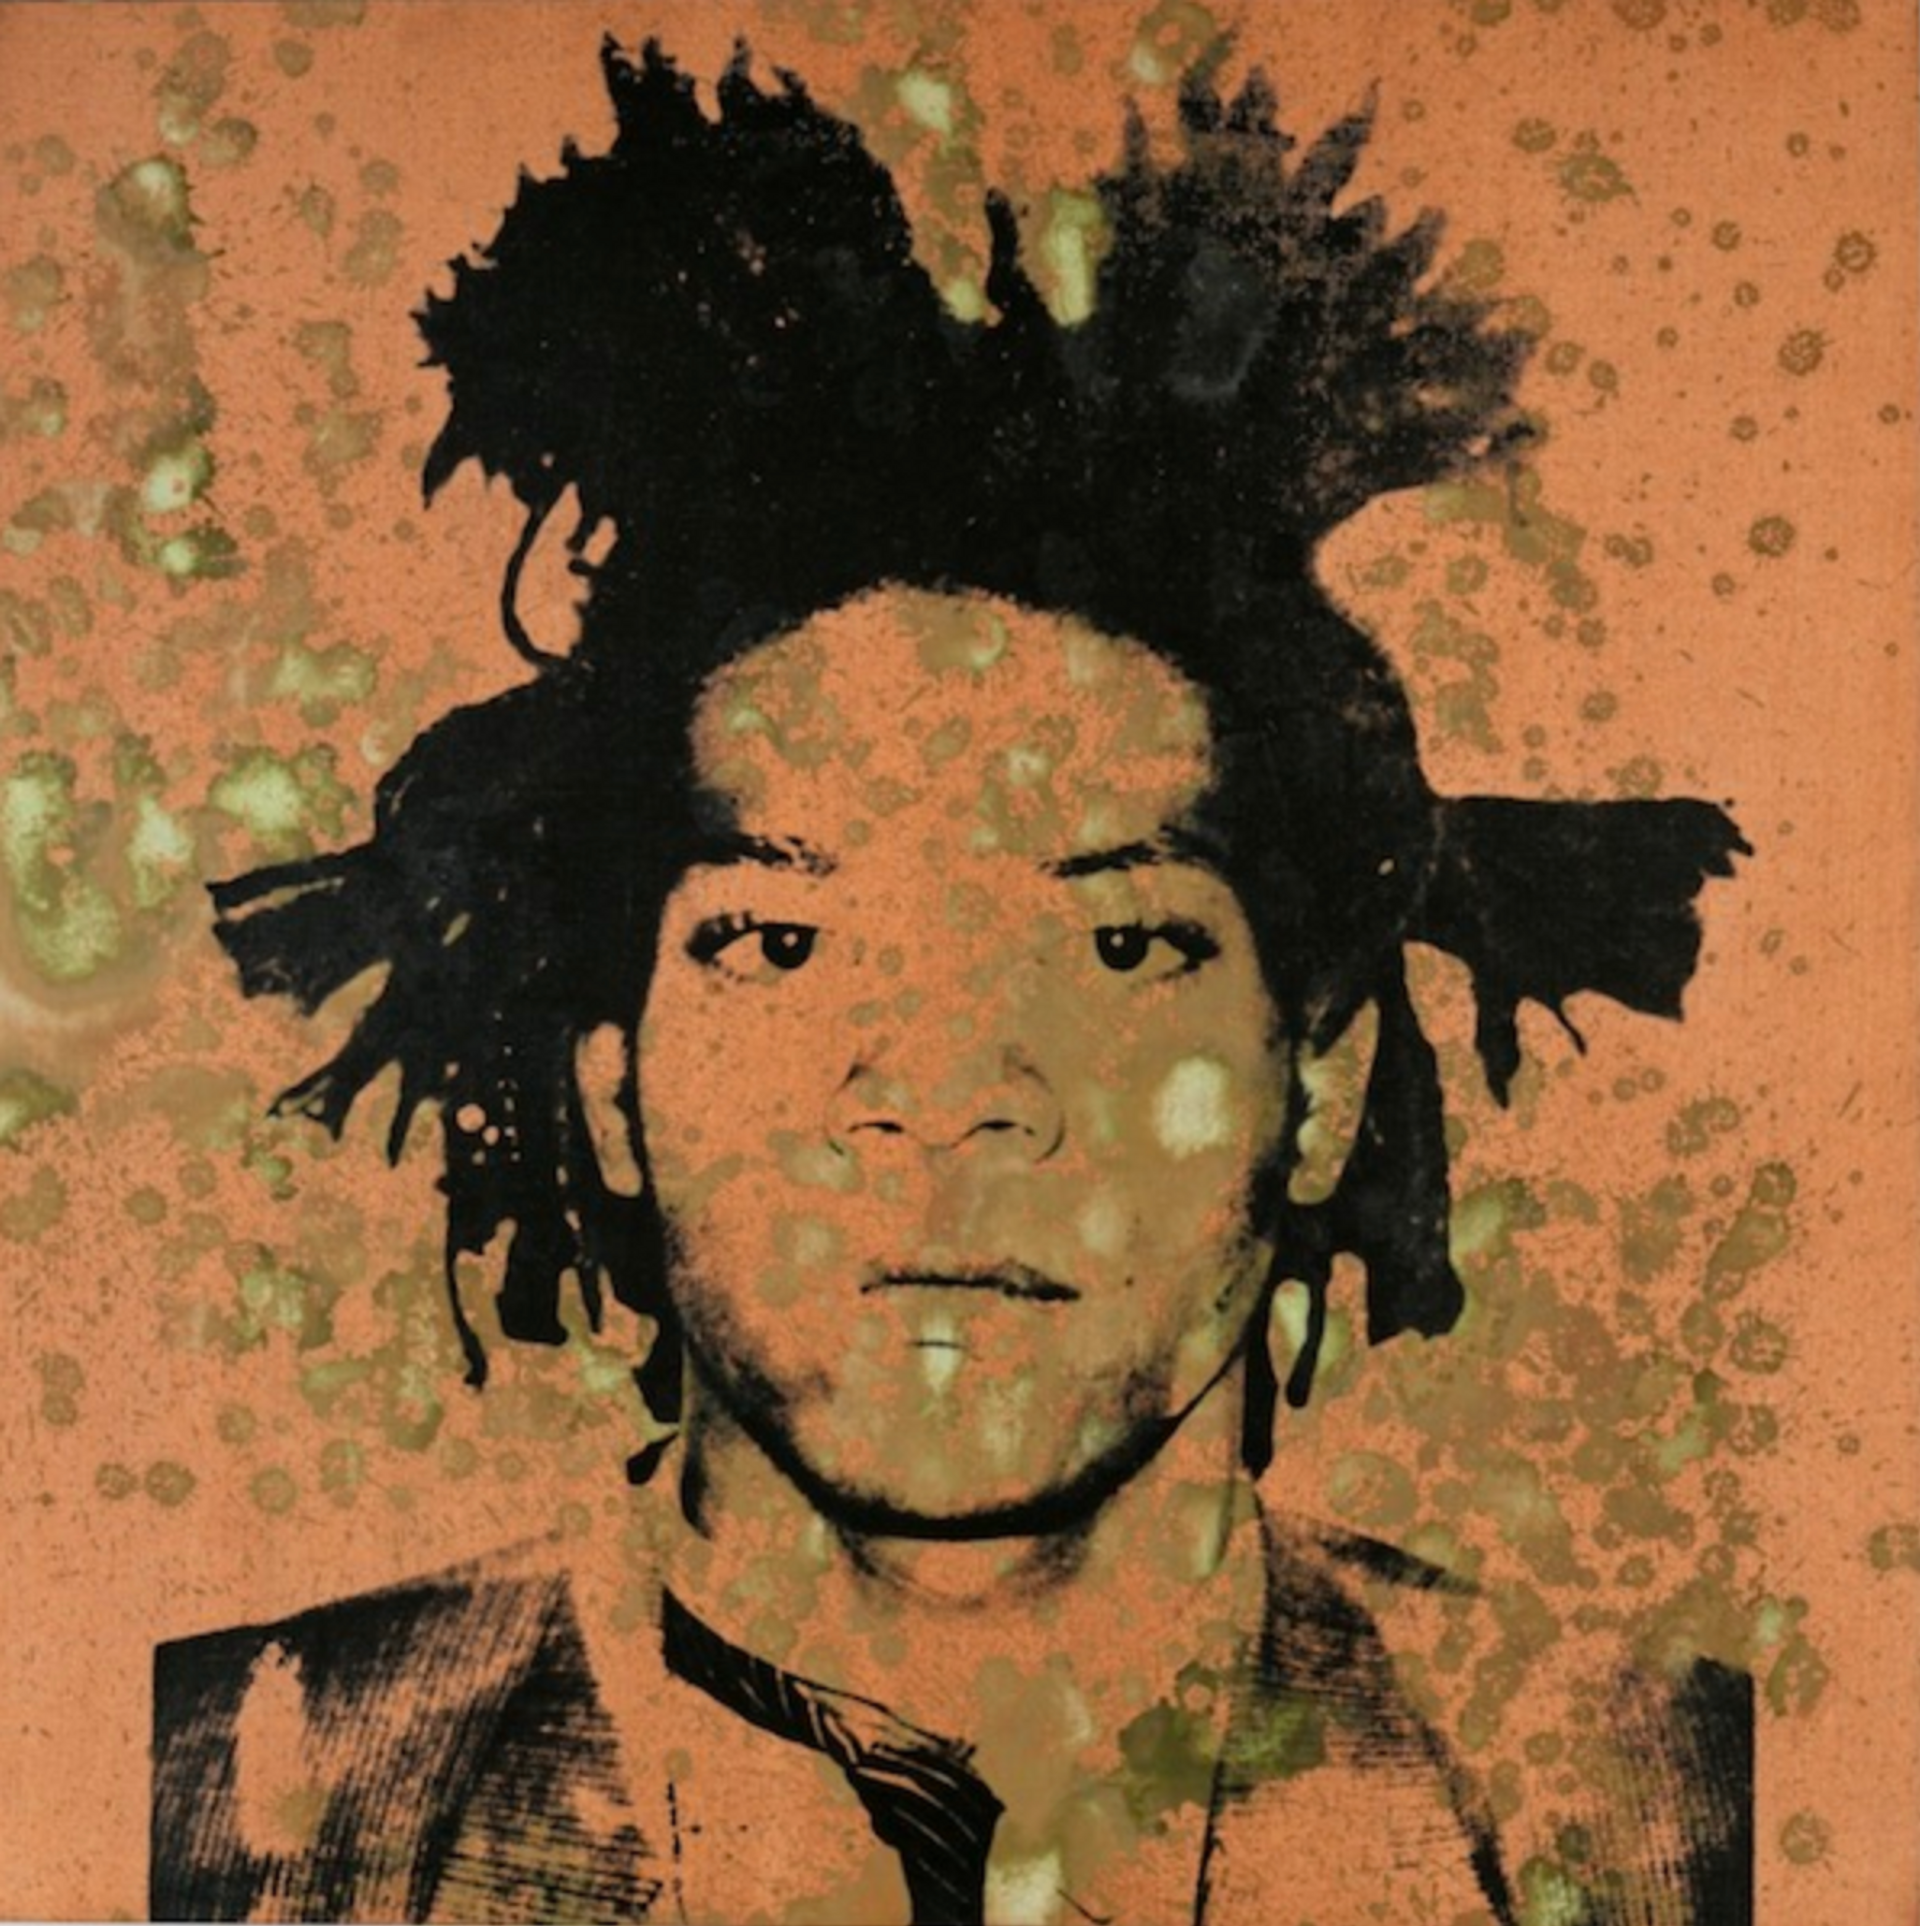 Jean-Michel Basquiat and Andy Warhol: An Unlikely Pair | MyArtBroker